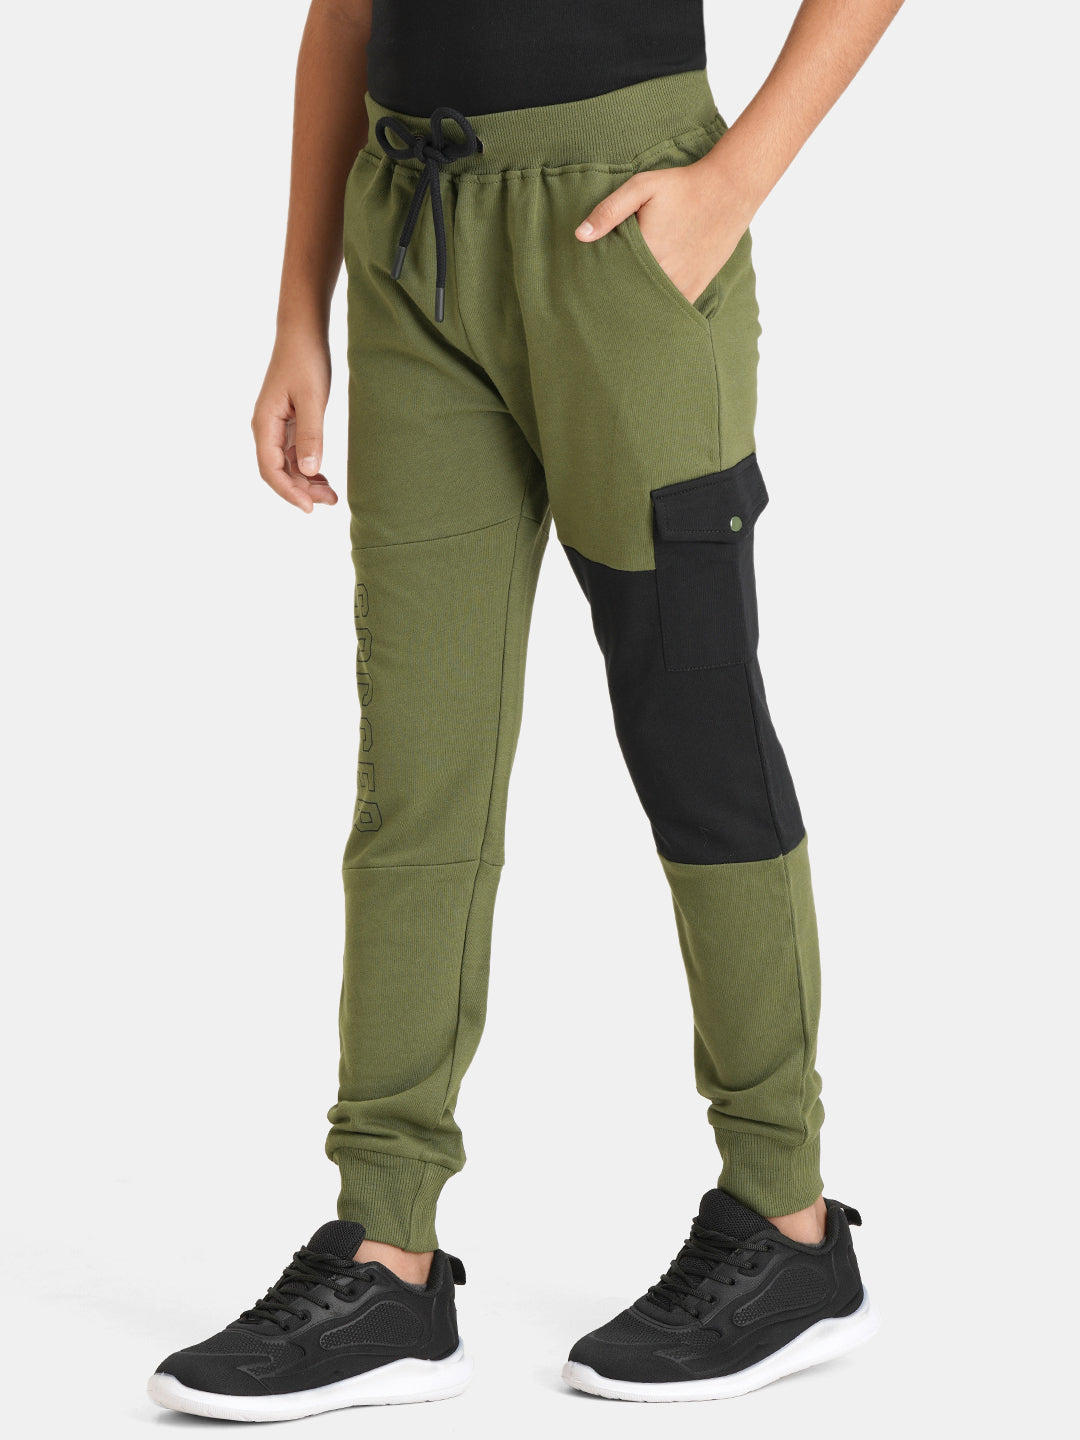 Urbano Juniors Boy's Green, Black Printed, Color Block Regular Fit Jogger Track Pants Stretch